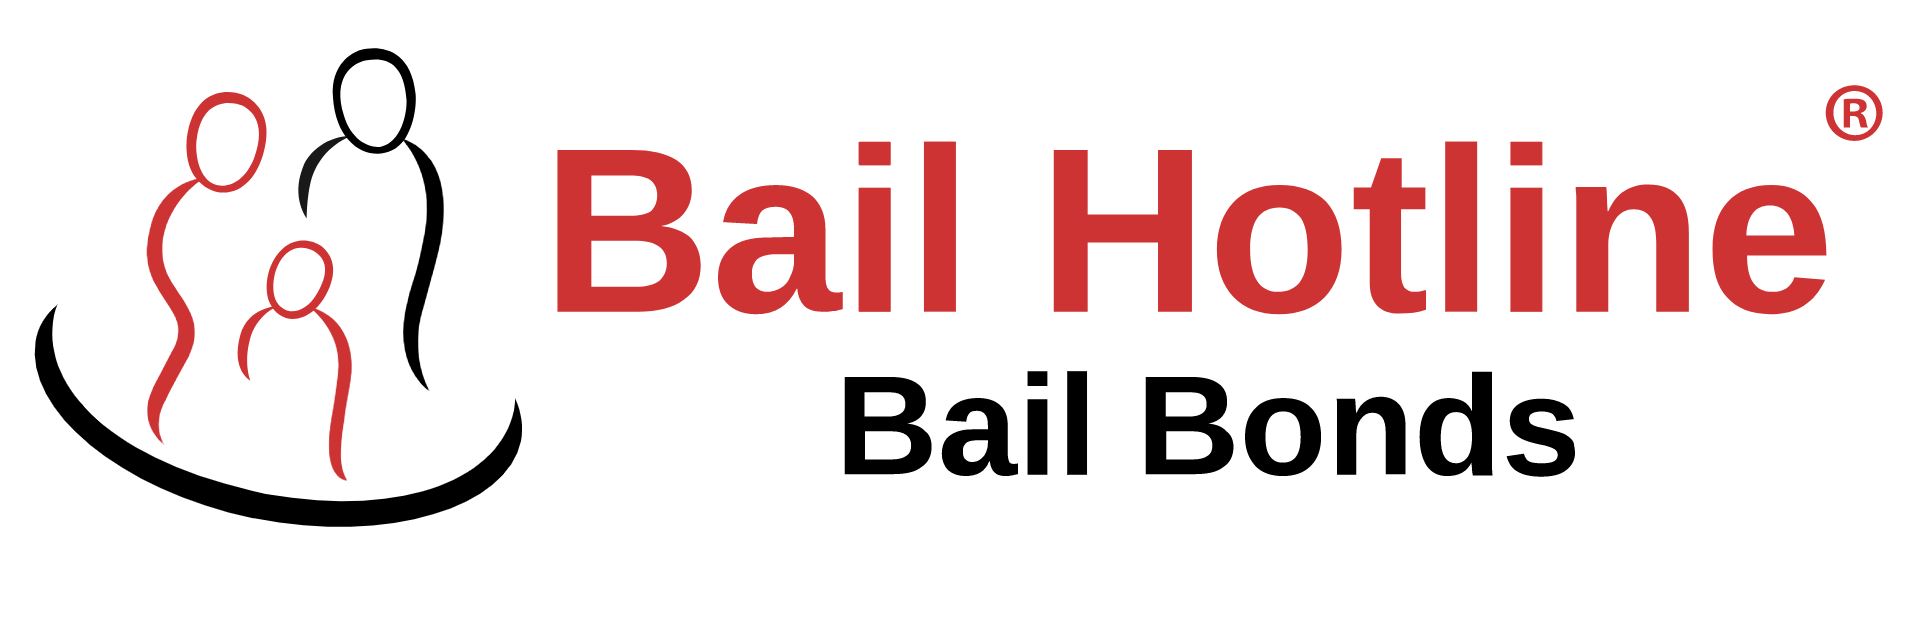 Bail Hotline Bail Bonds Ventura's Logo